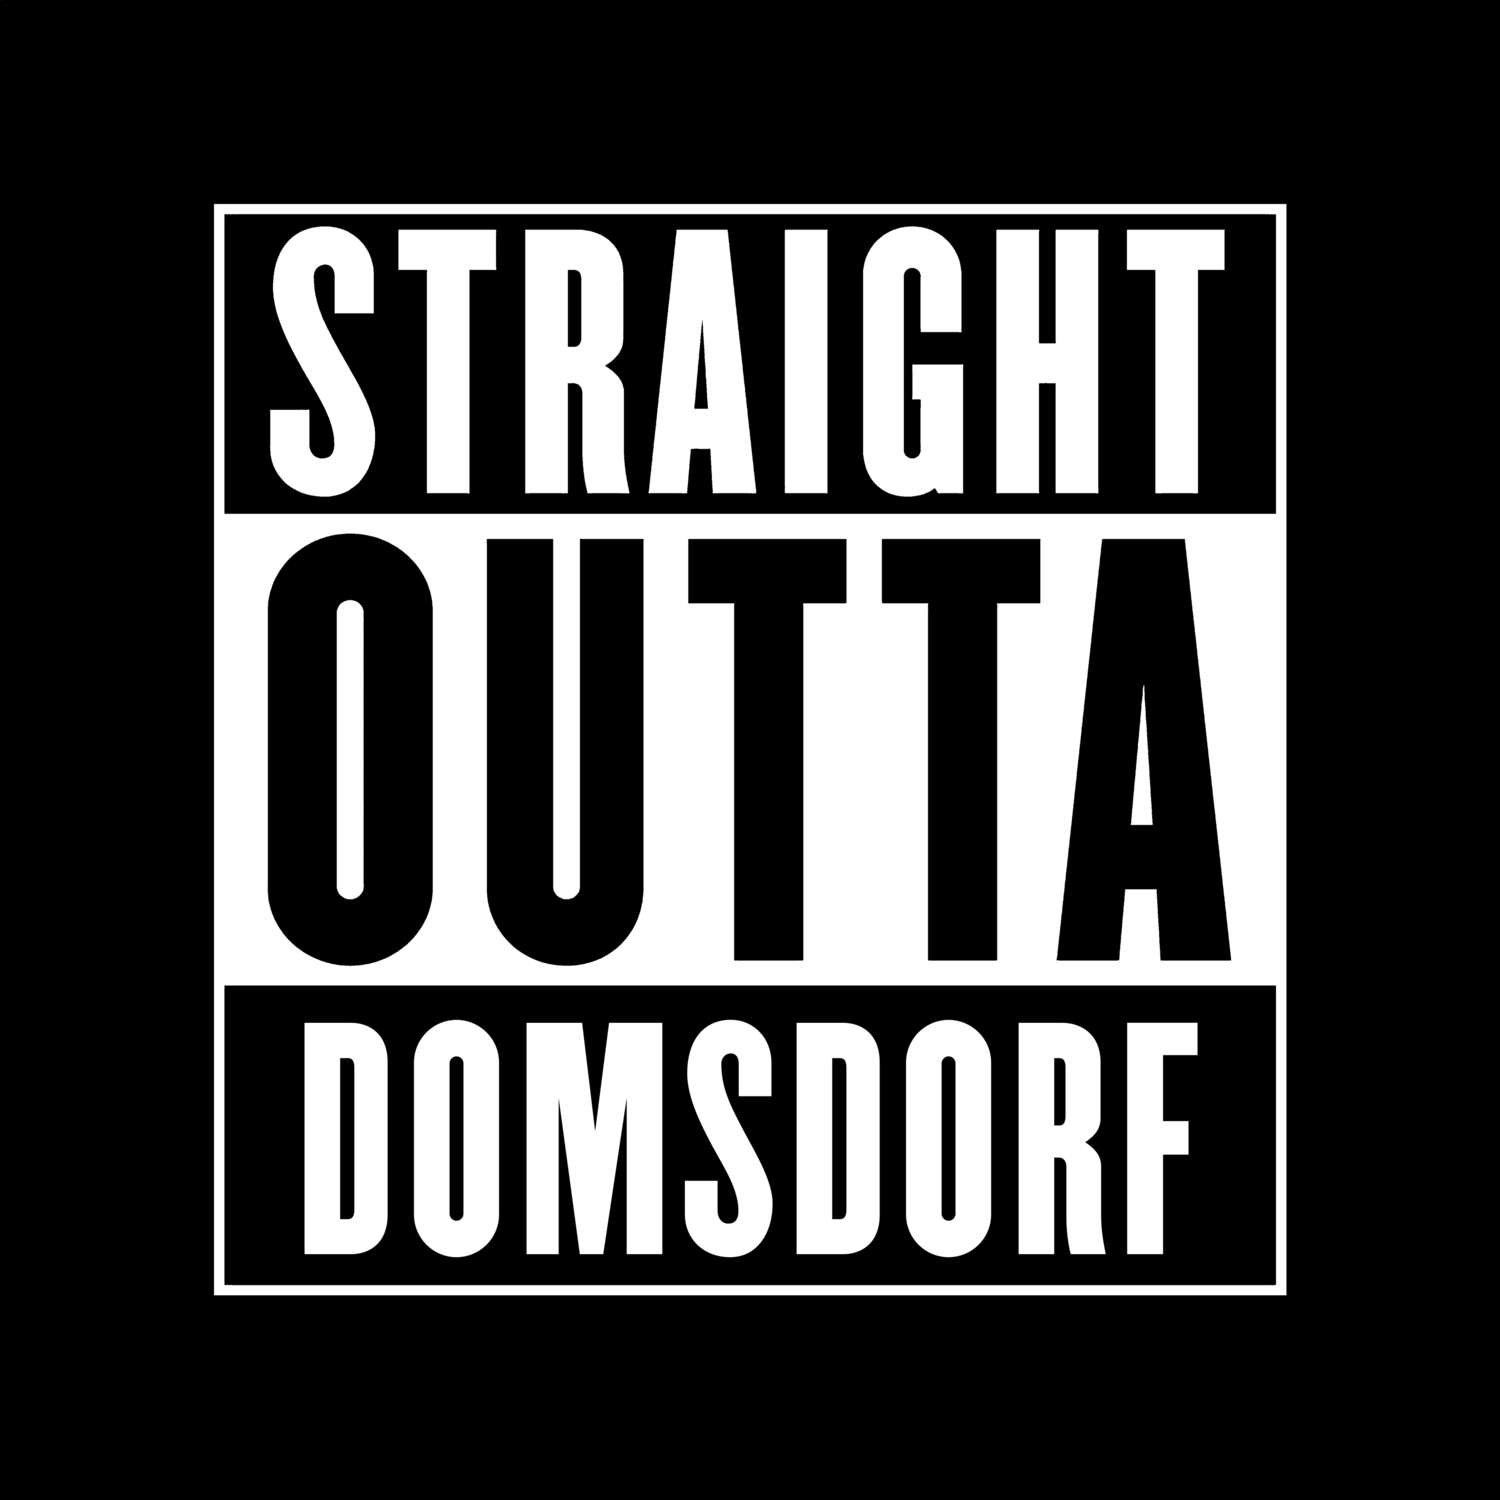 Domsdorf T-Shirt »Straight Outta«